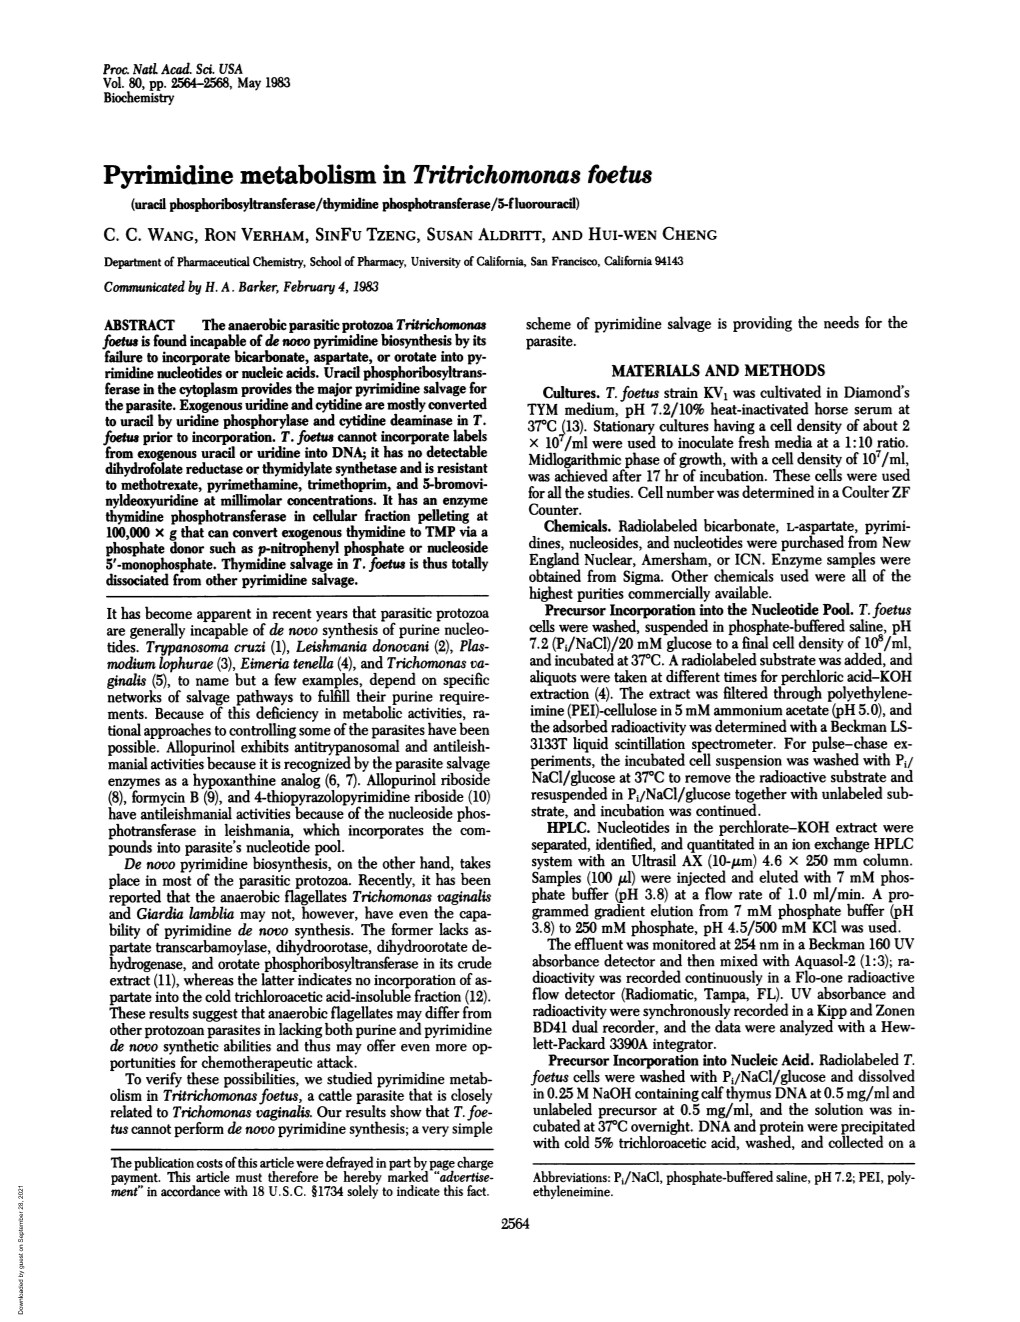 Pyrimidine Metabolism in Tritrichomonas Foetus (Uracil Phosphoribosyltransferase/Thymidine Phosphotransferase/5-Fluorouracil) C